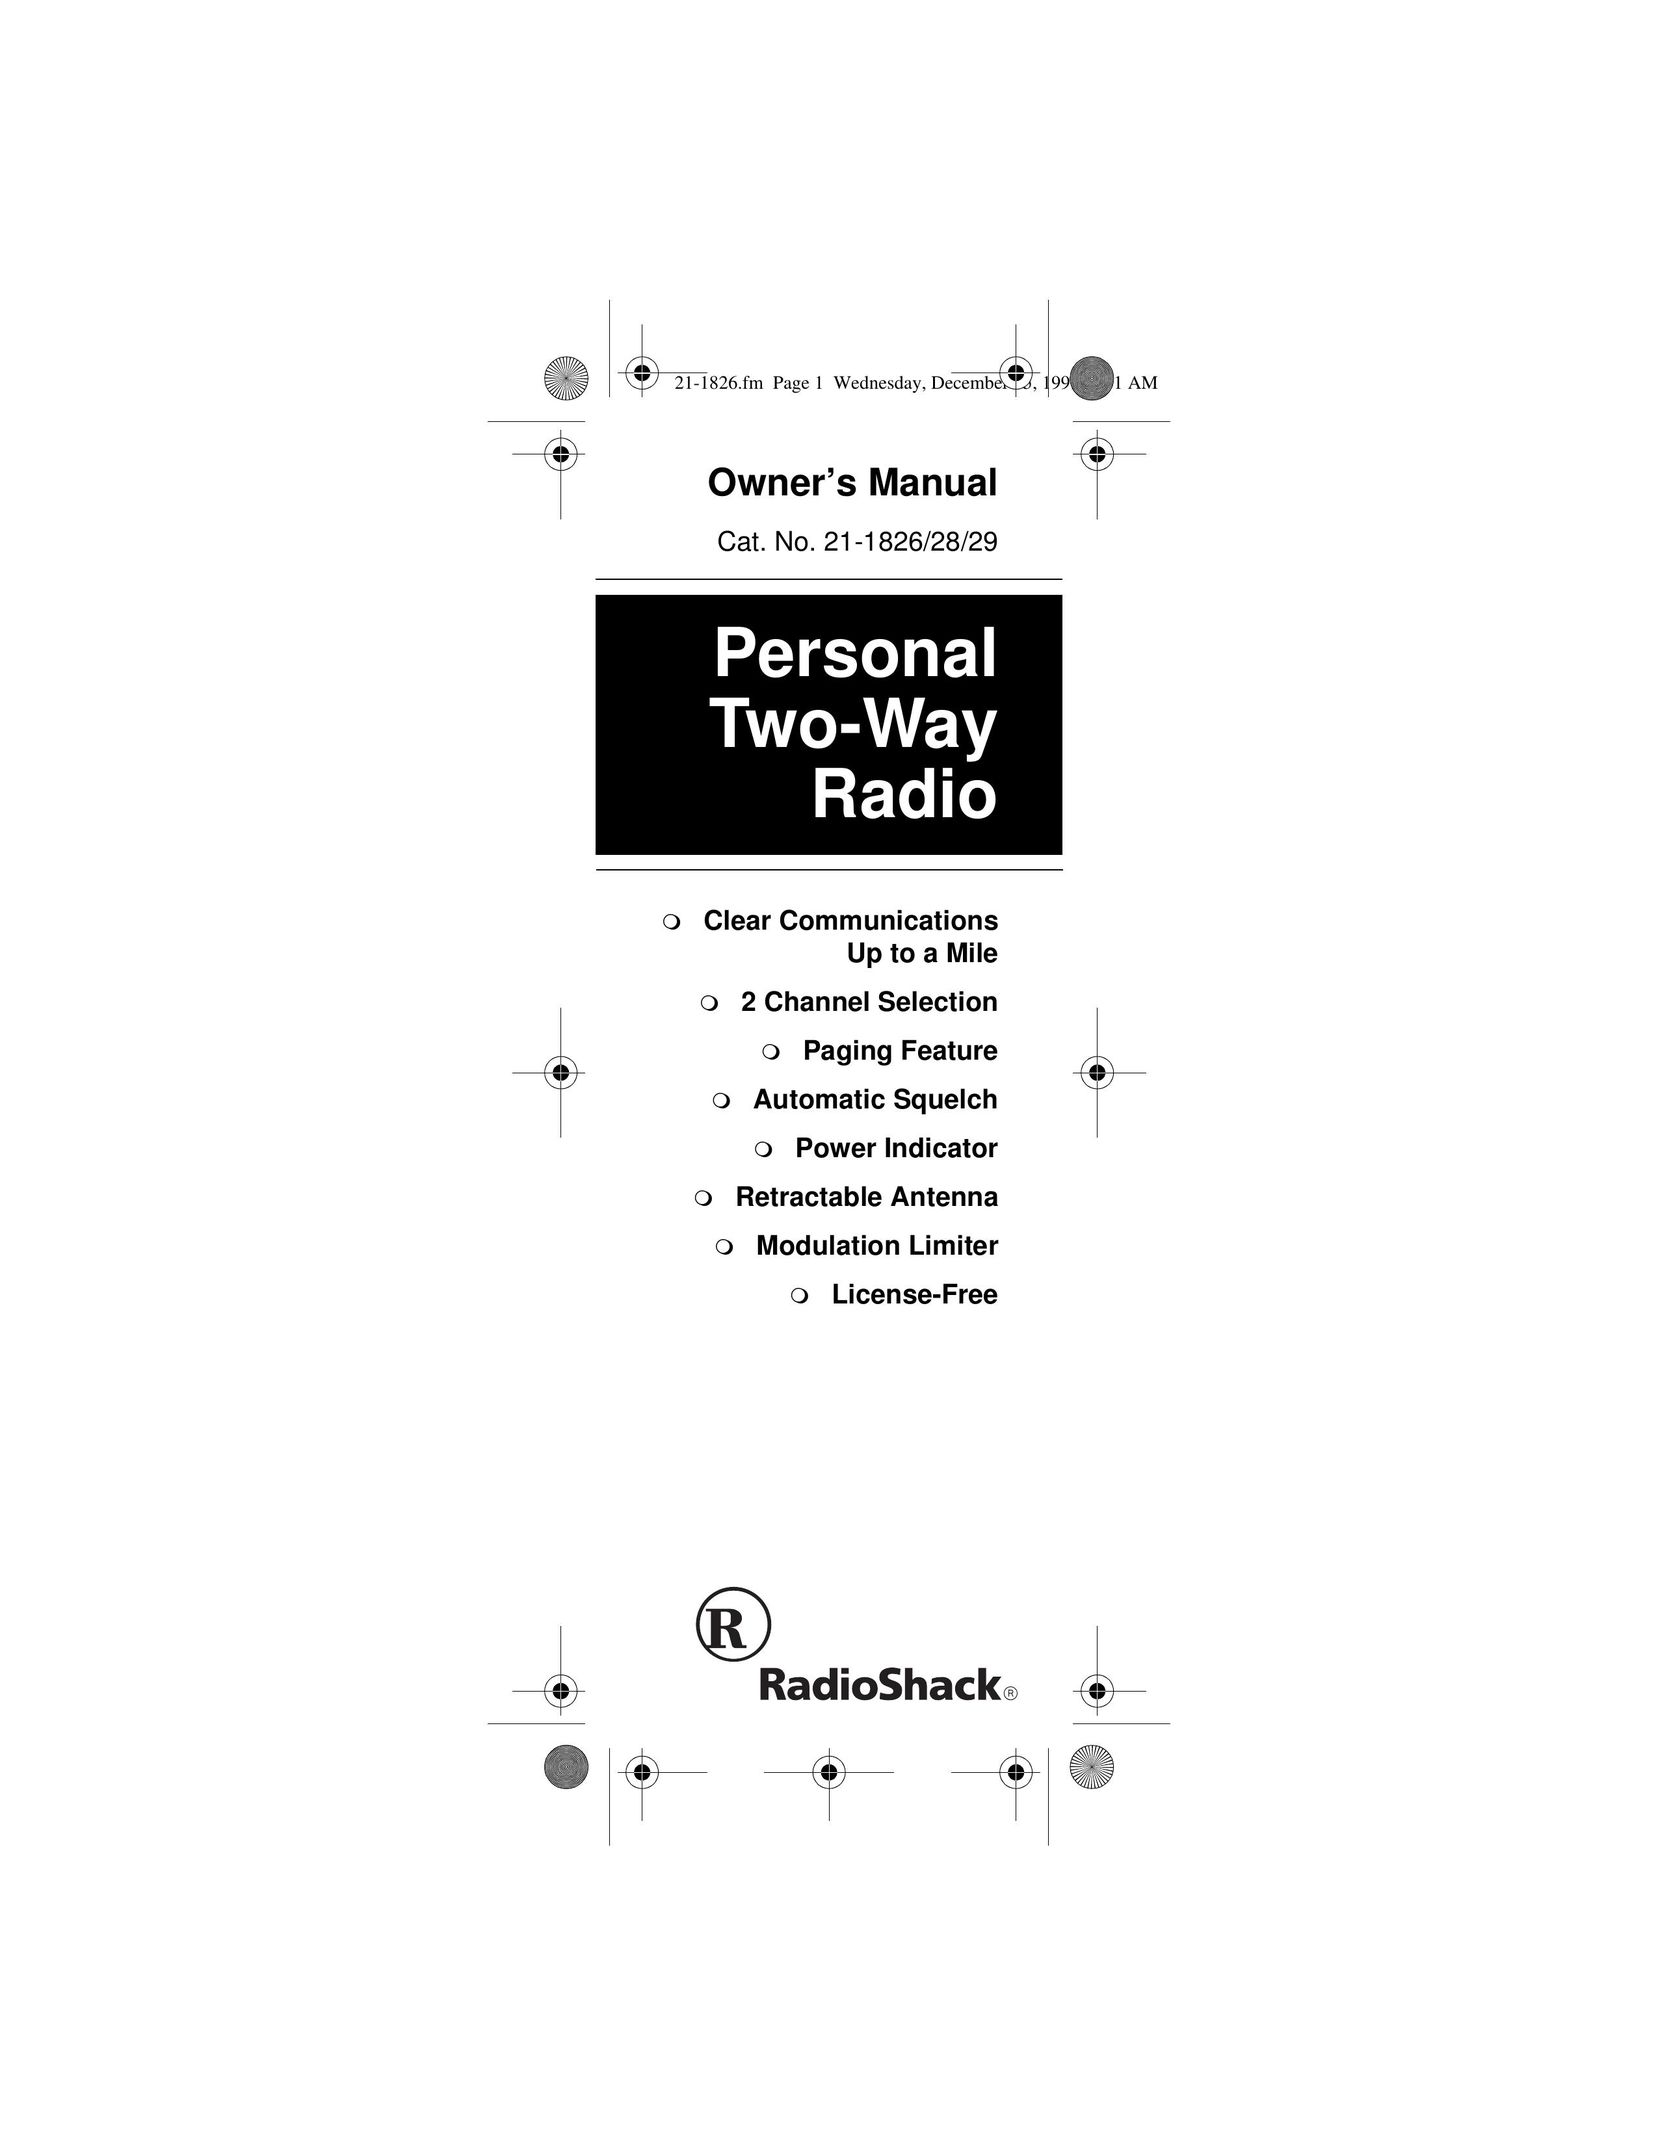 Radio Shack 21-1826/28/29 Two-Way Radio User Manual